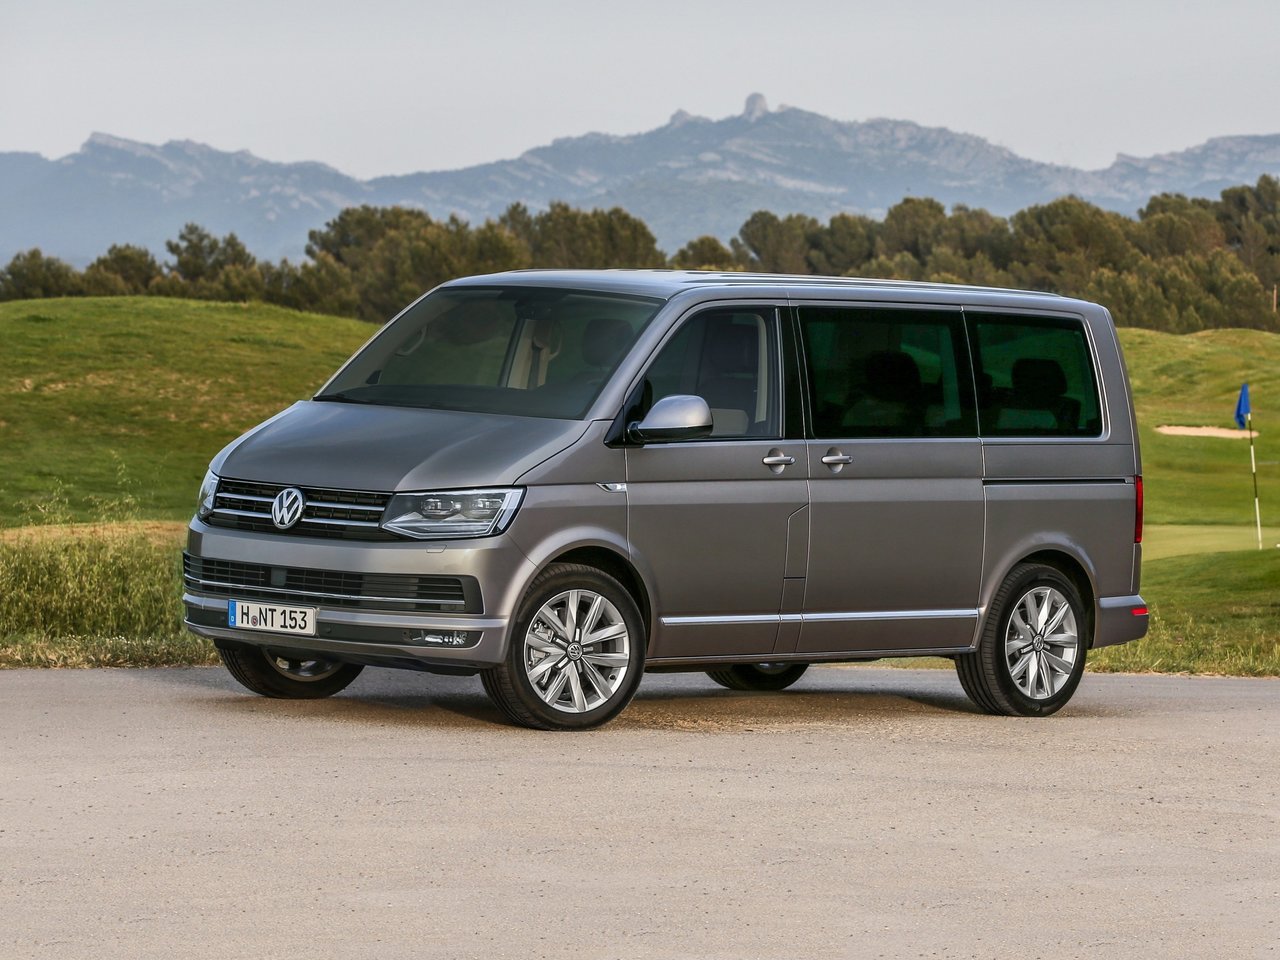 Снижаем расход Volkswagen Multivan на топливо, устанавливаем ГБО